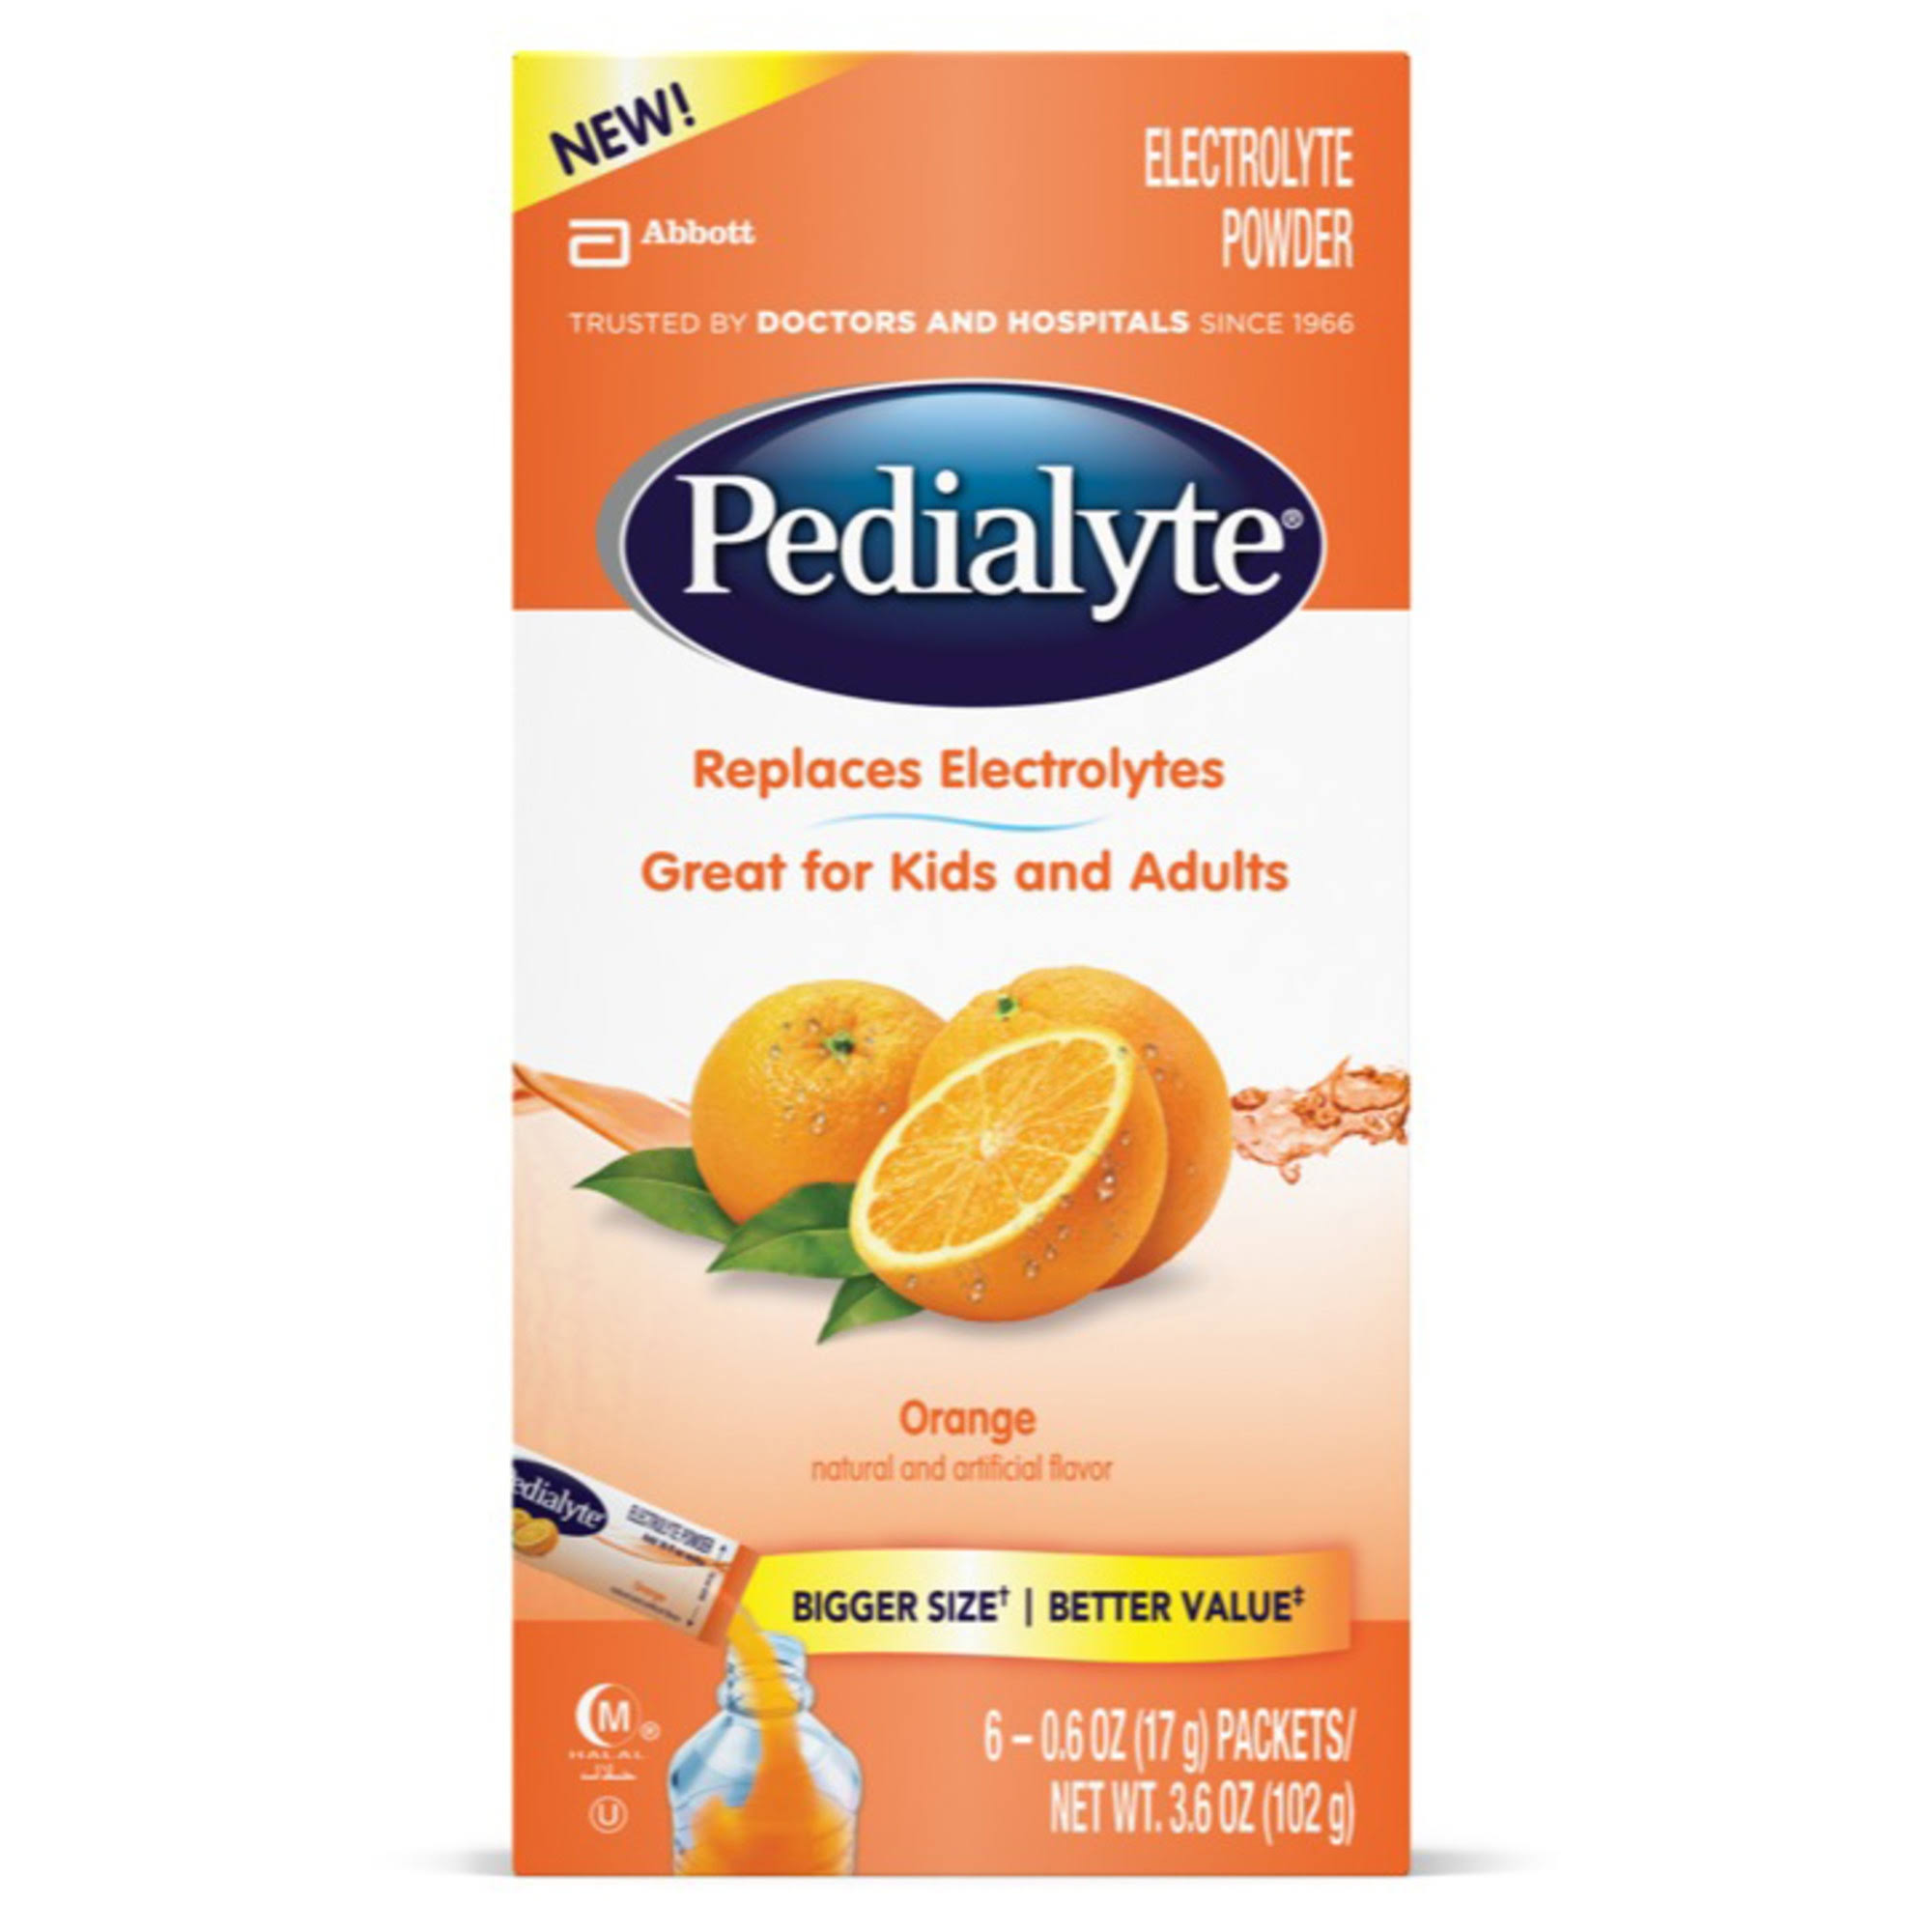 Abbott Pedialyte Electrolyte Powder Electrolyte Drink Powder Sticks - Orange, 0.6oz, 6ct